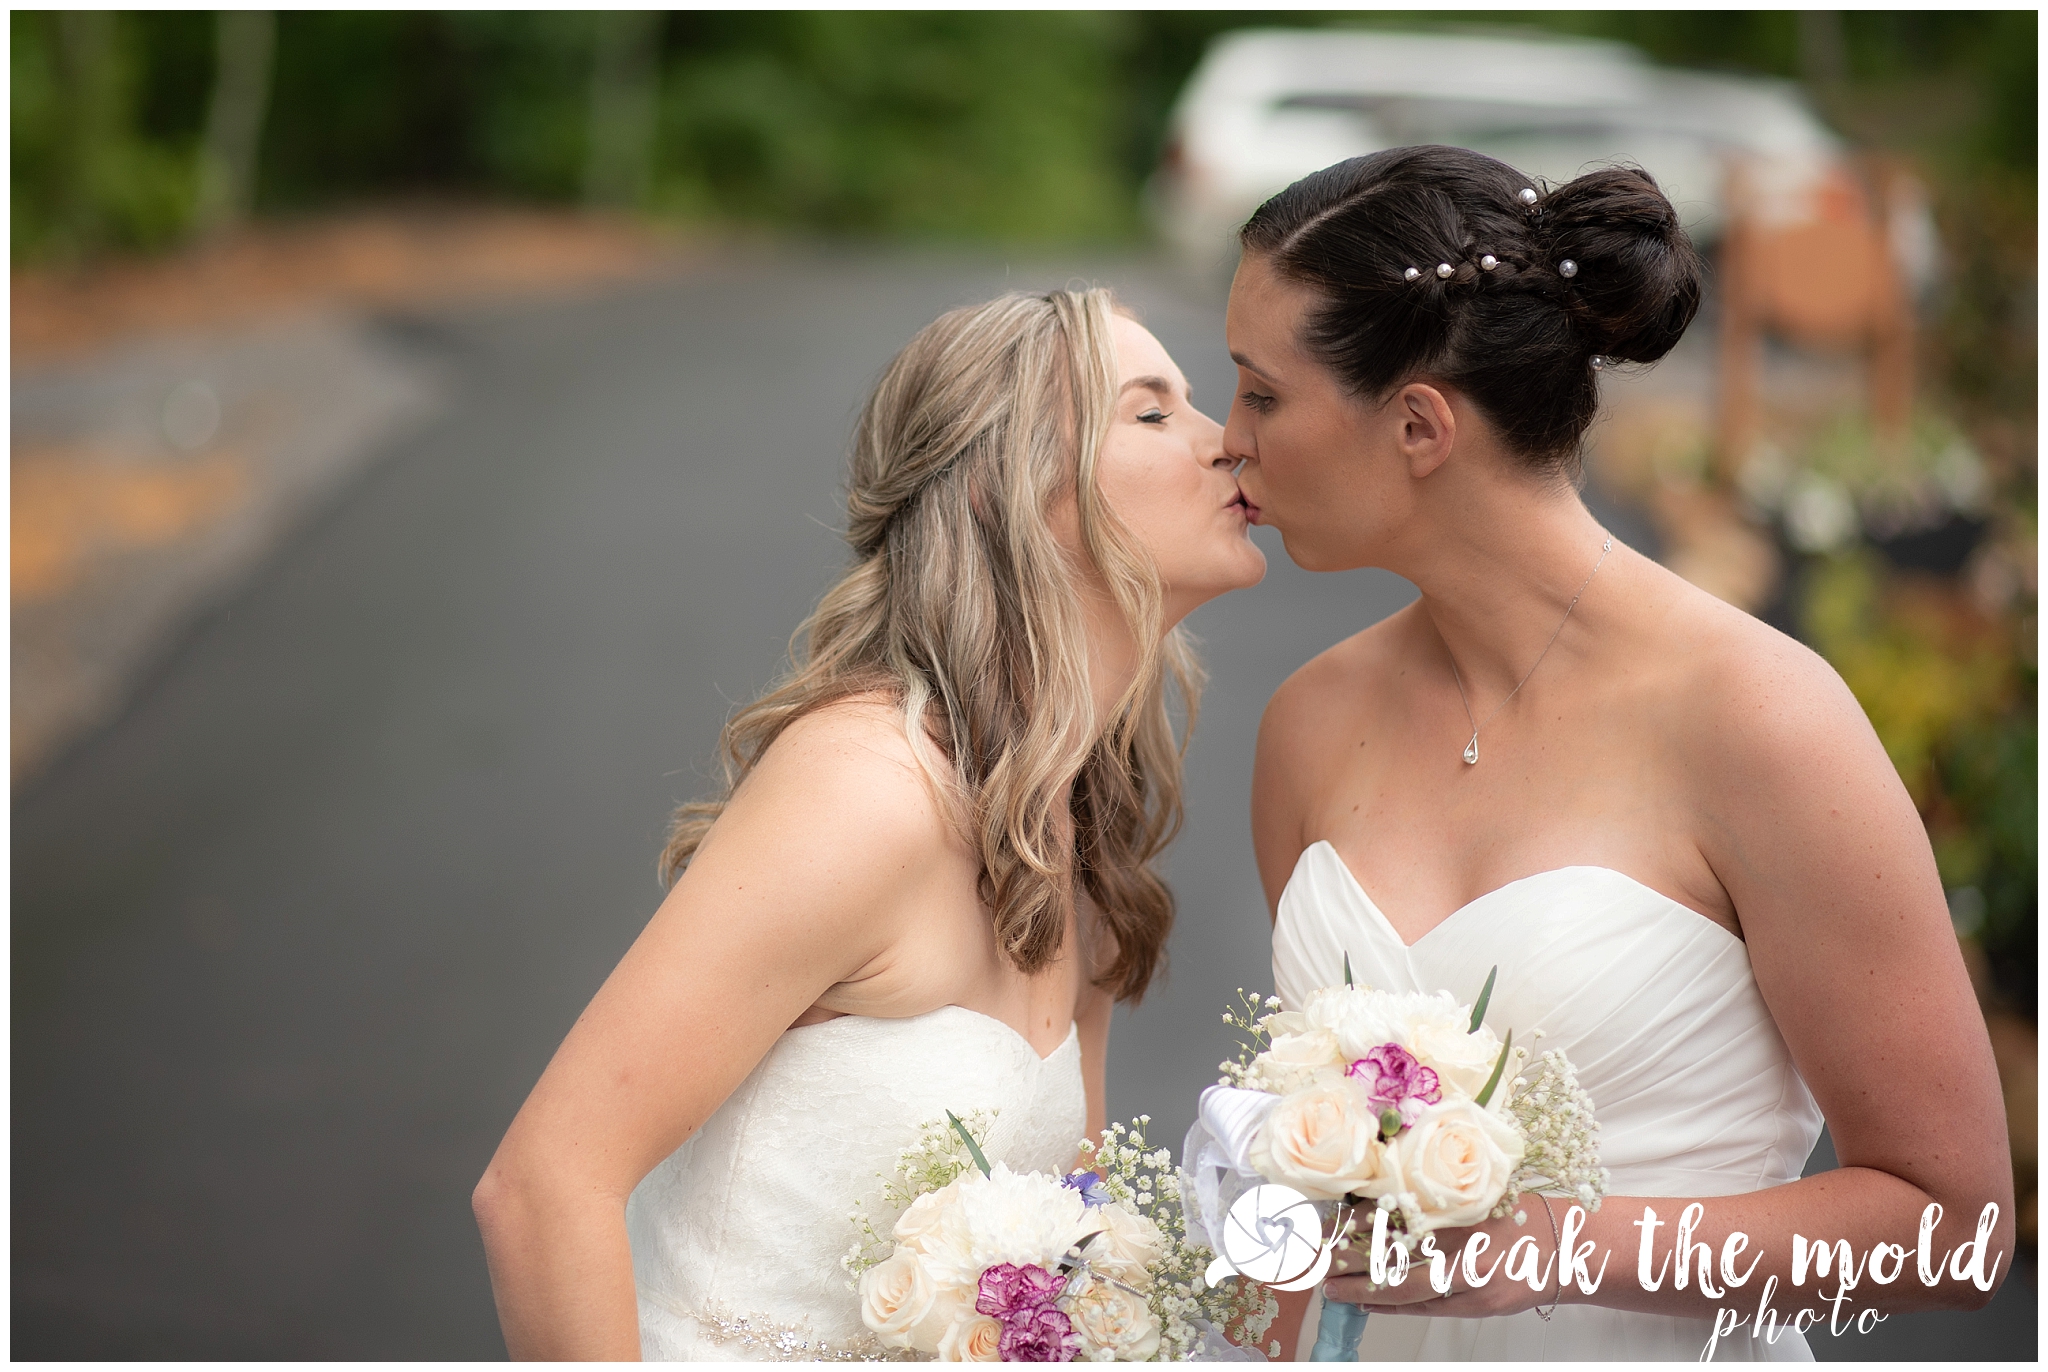 break-the-mold-photo-magnolia-gatlinburg-wedding-photographer-smoky-mountains-same-sex-lesbian-gay-wedding-rainbow-beautiful_0962.jpg